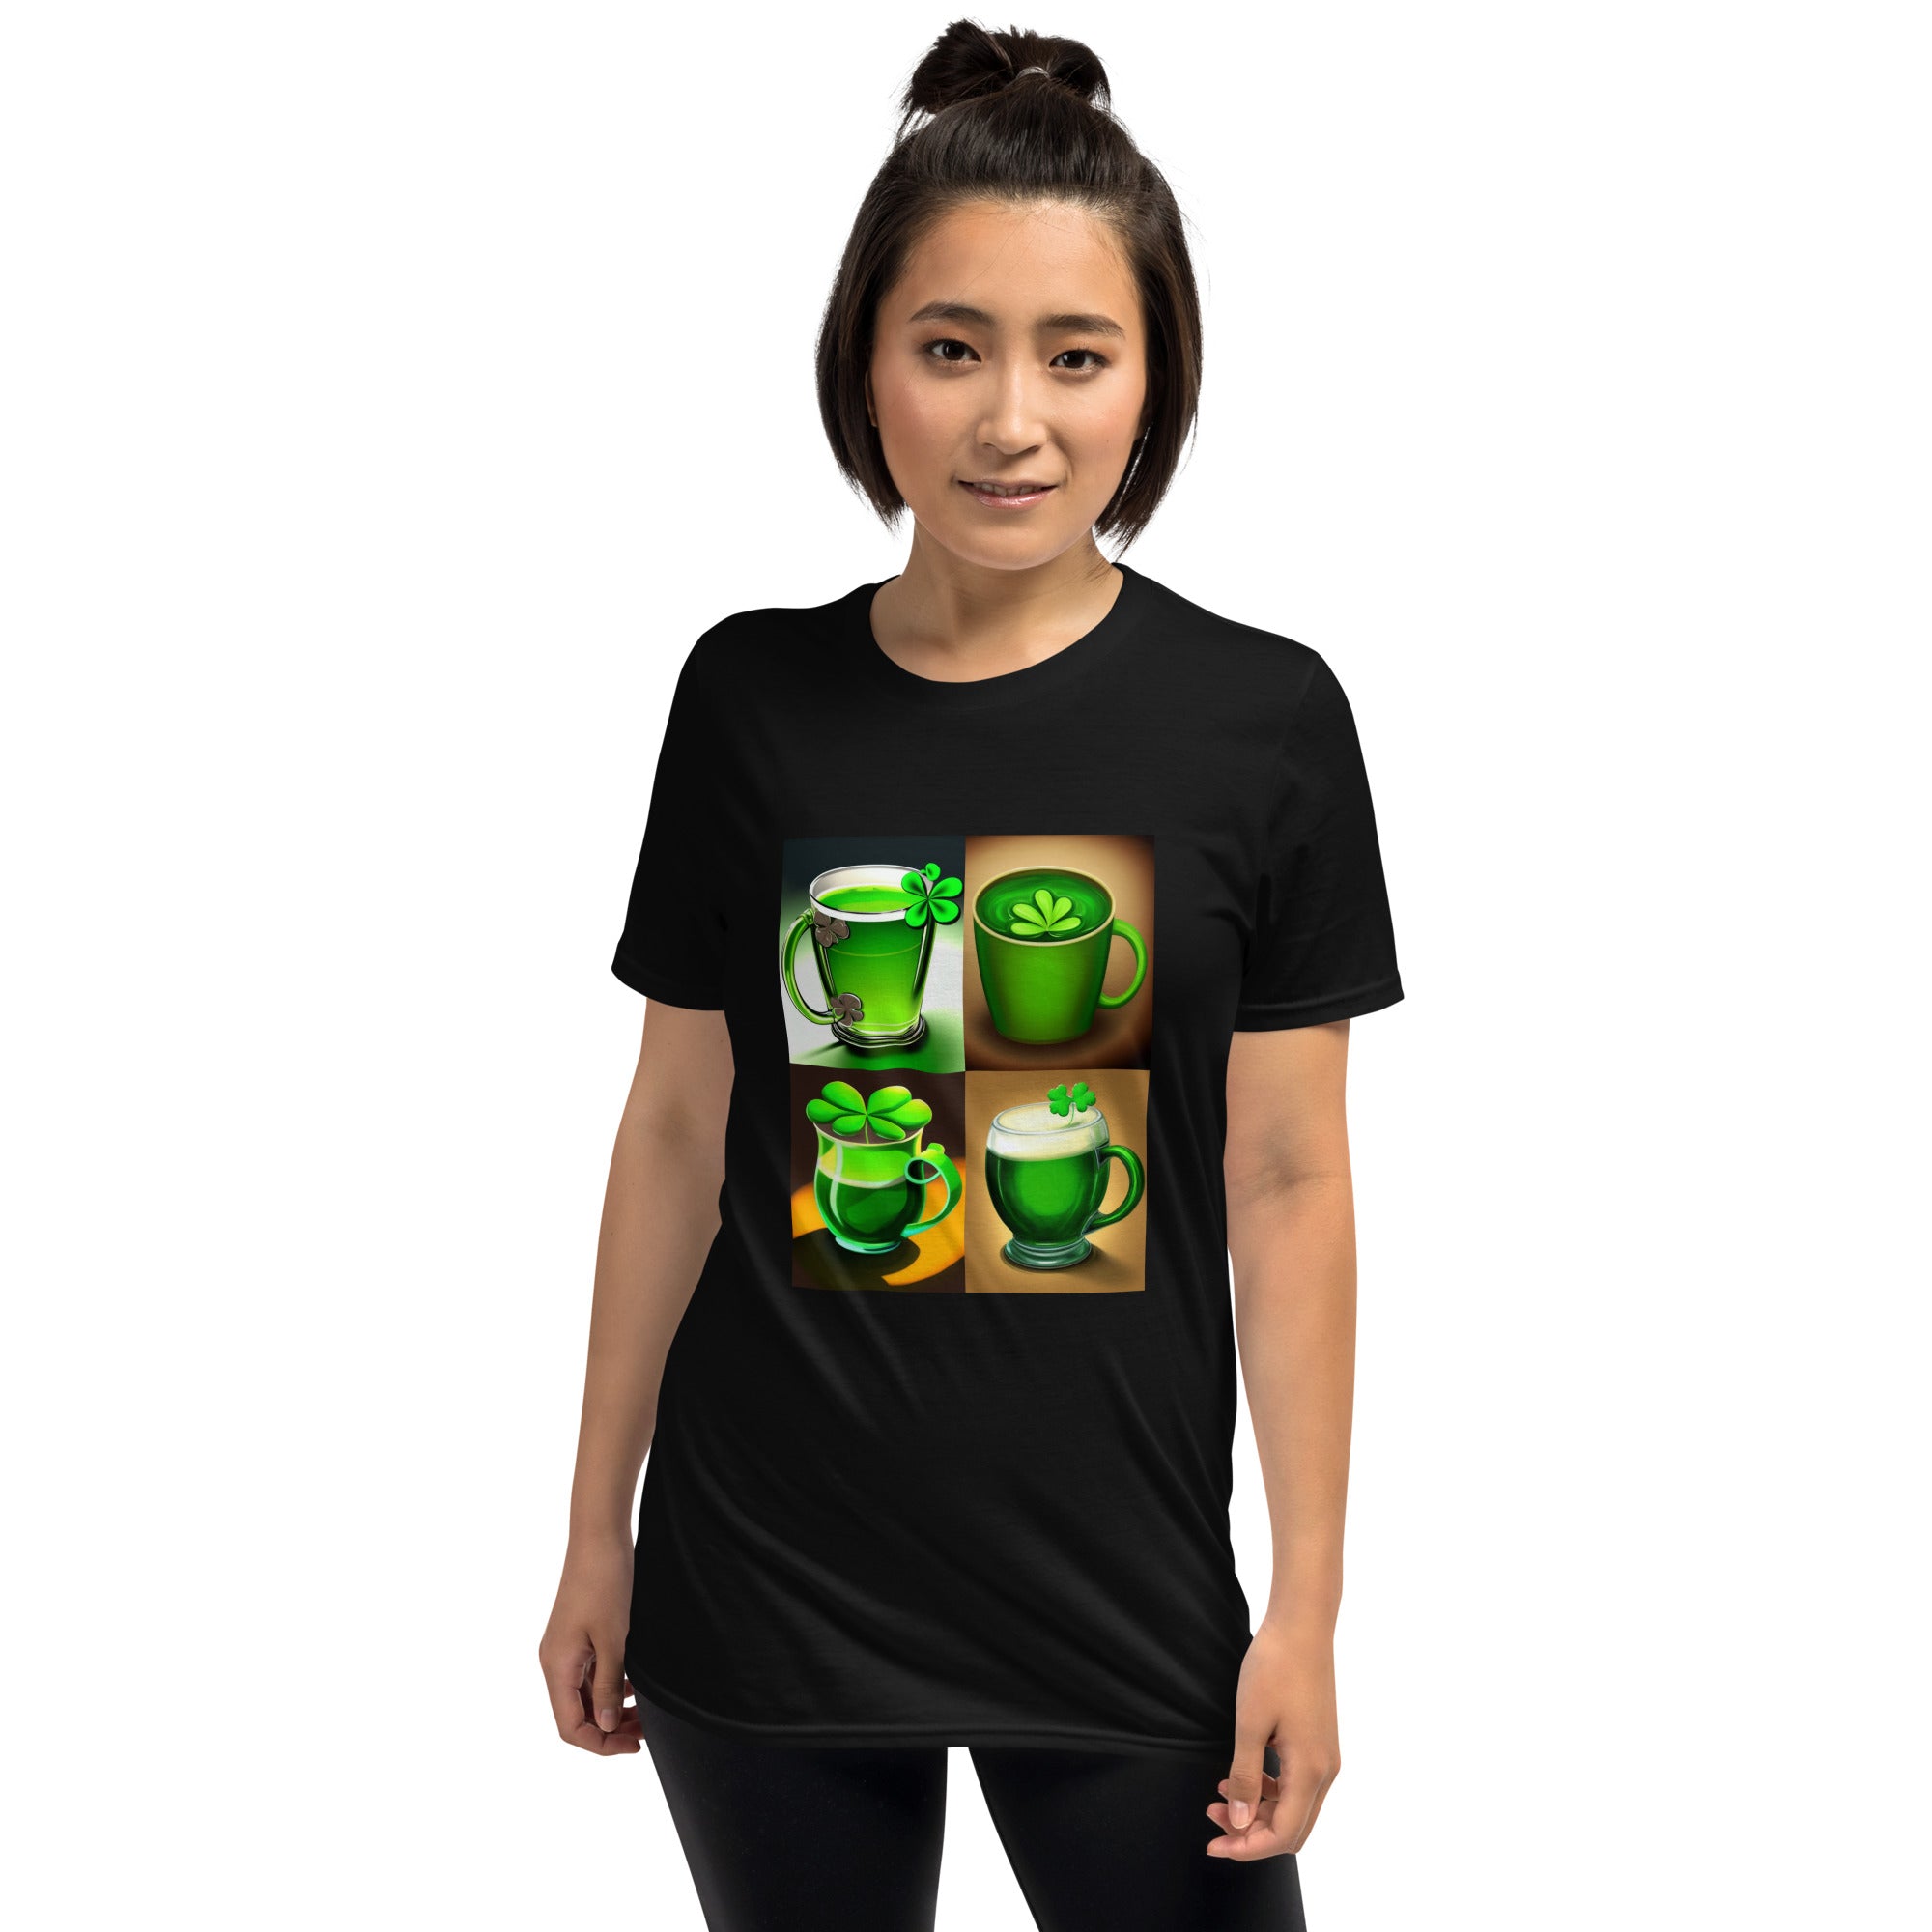 St Patricks Day Drinks Unisex Shirt